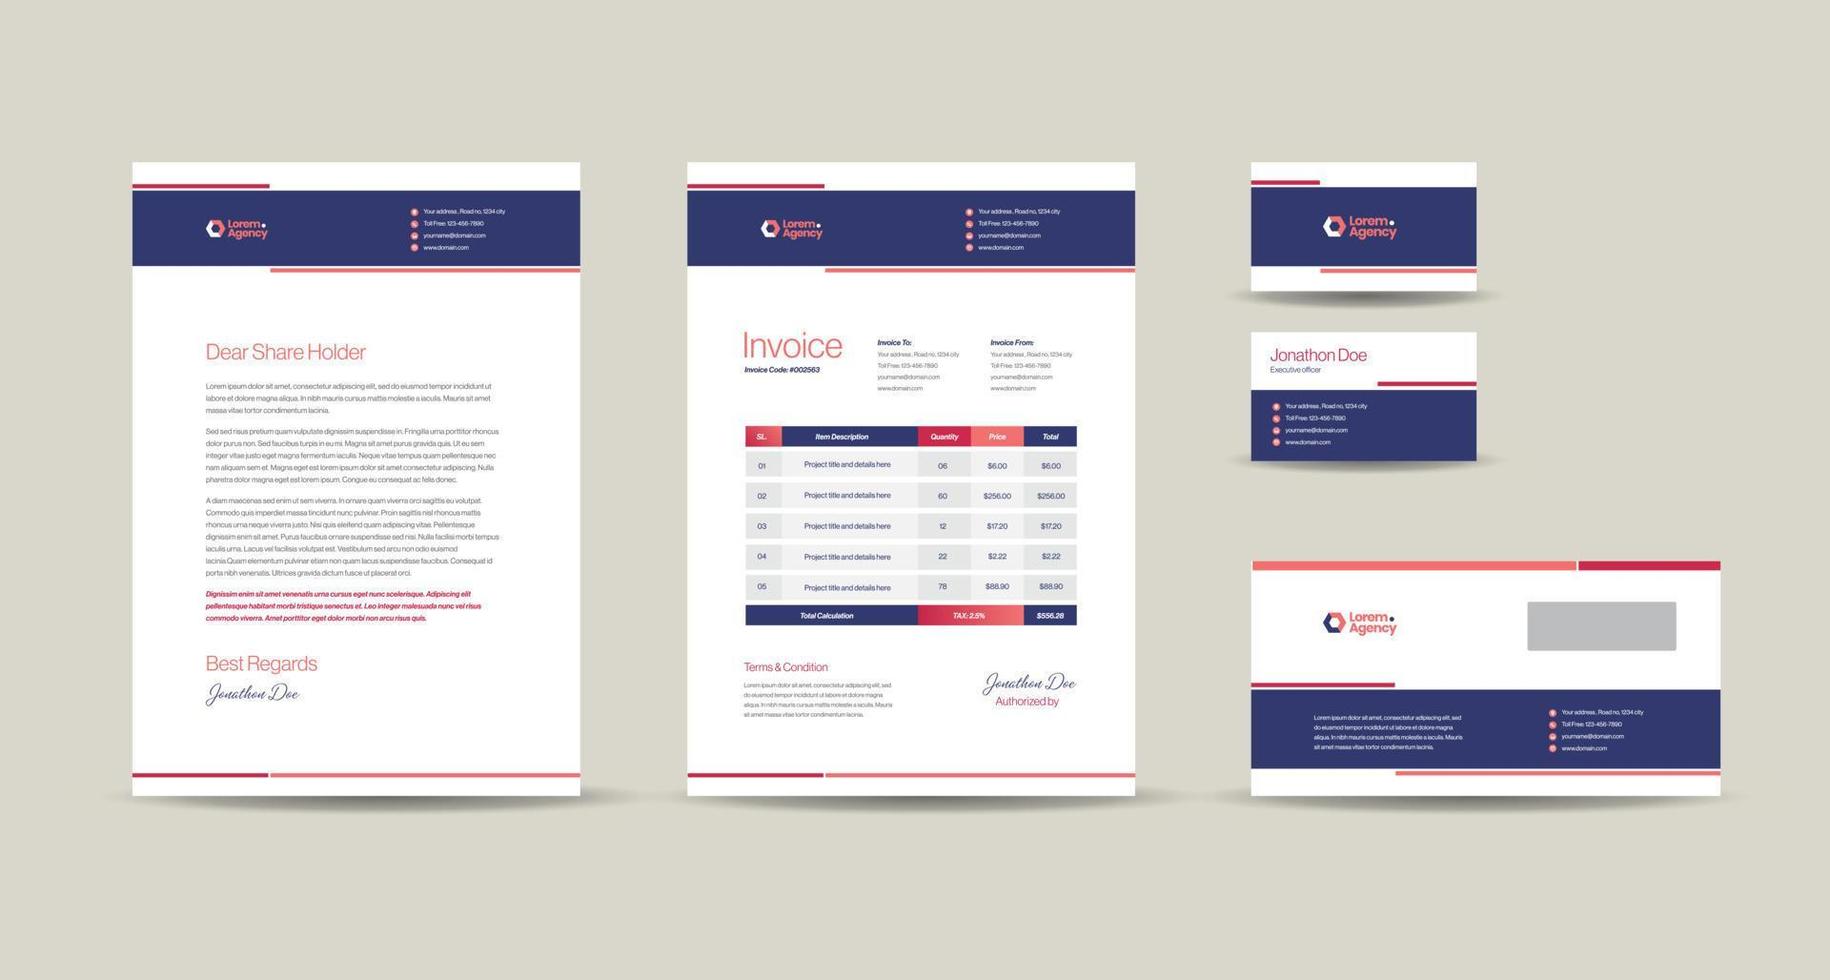 Corporate Business Branding Identity Design or Stationery Design  Letterhead  Business Card Invoice  Envelope  Startup Design vector